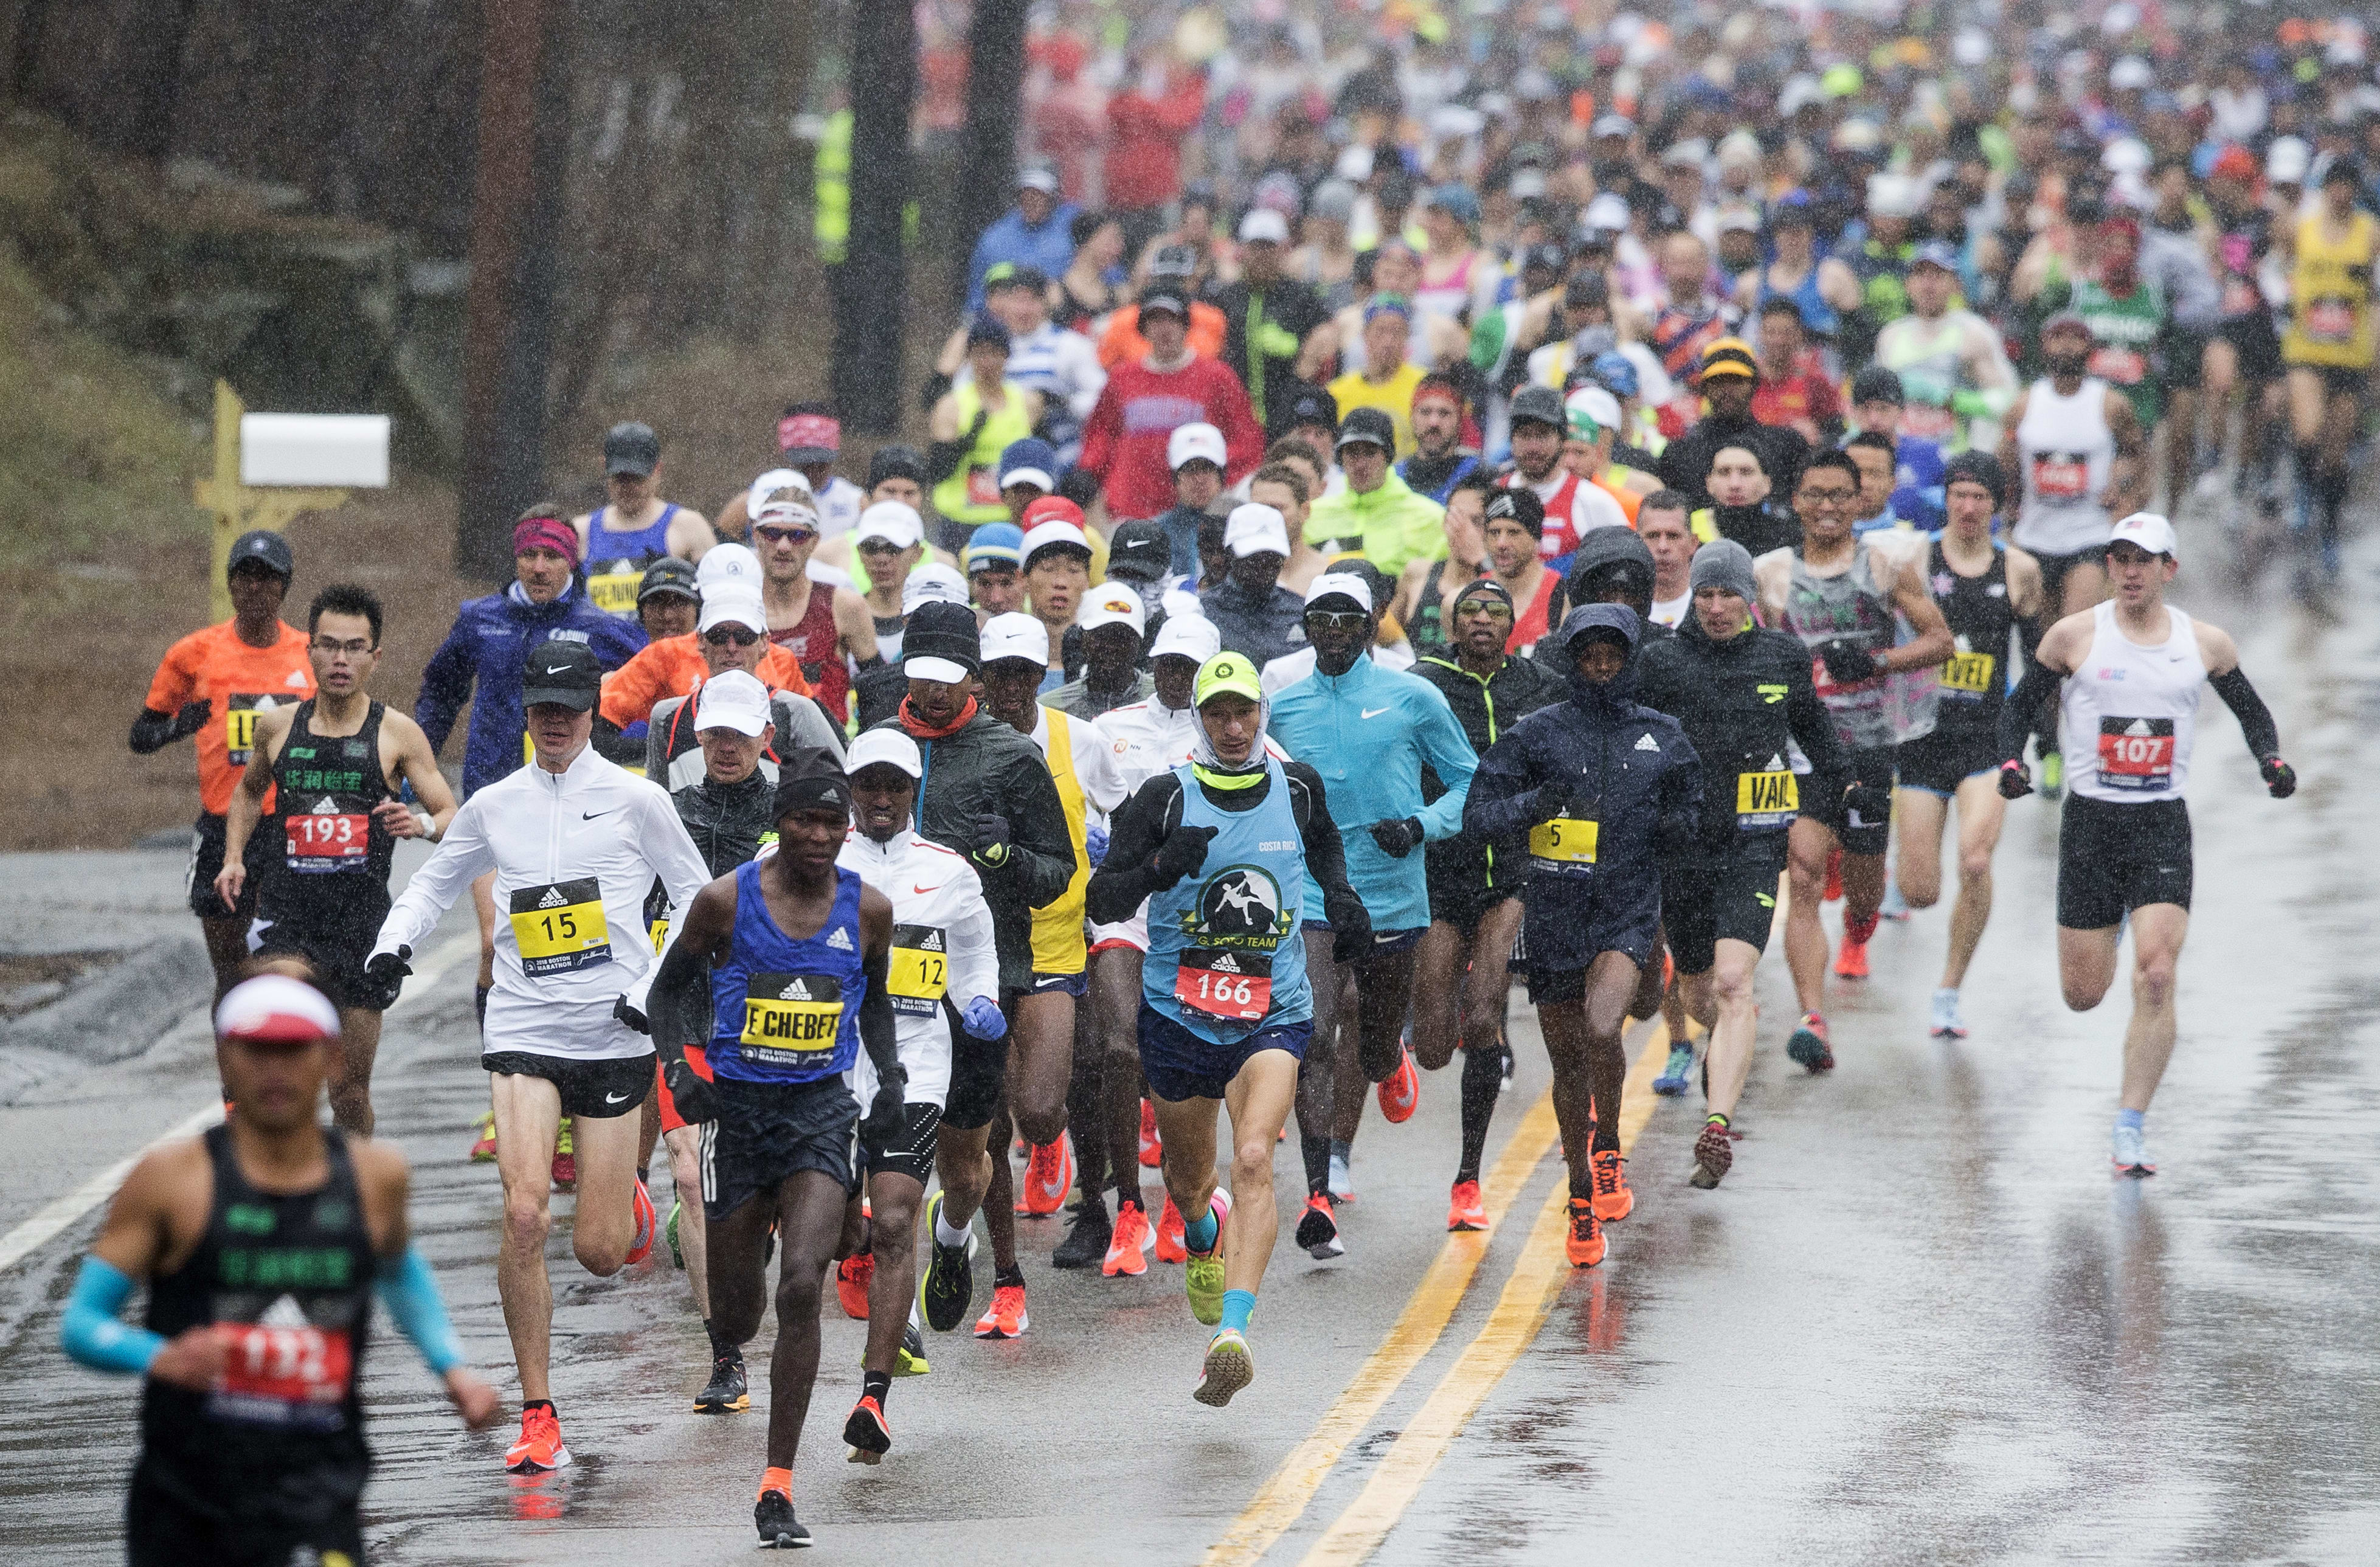 Adidas Made Over 30,000 Video Recaps for Every Boston Marathon ...